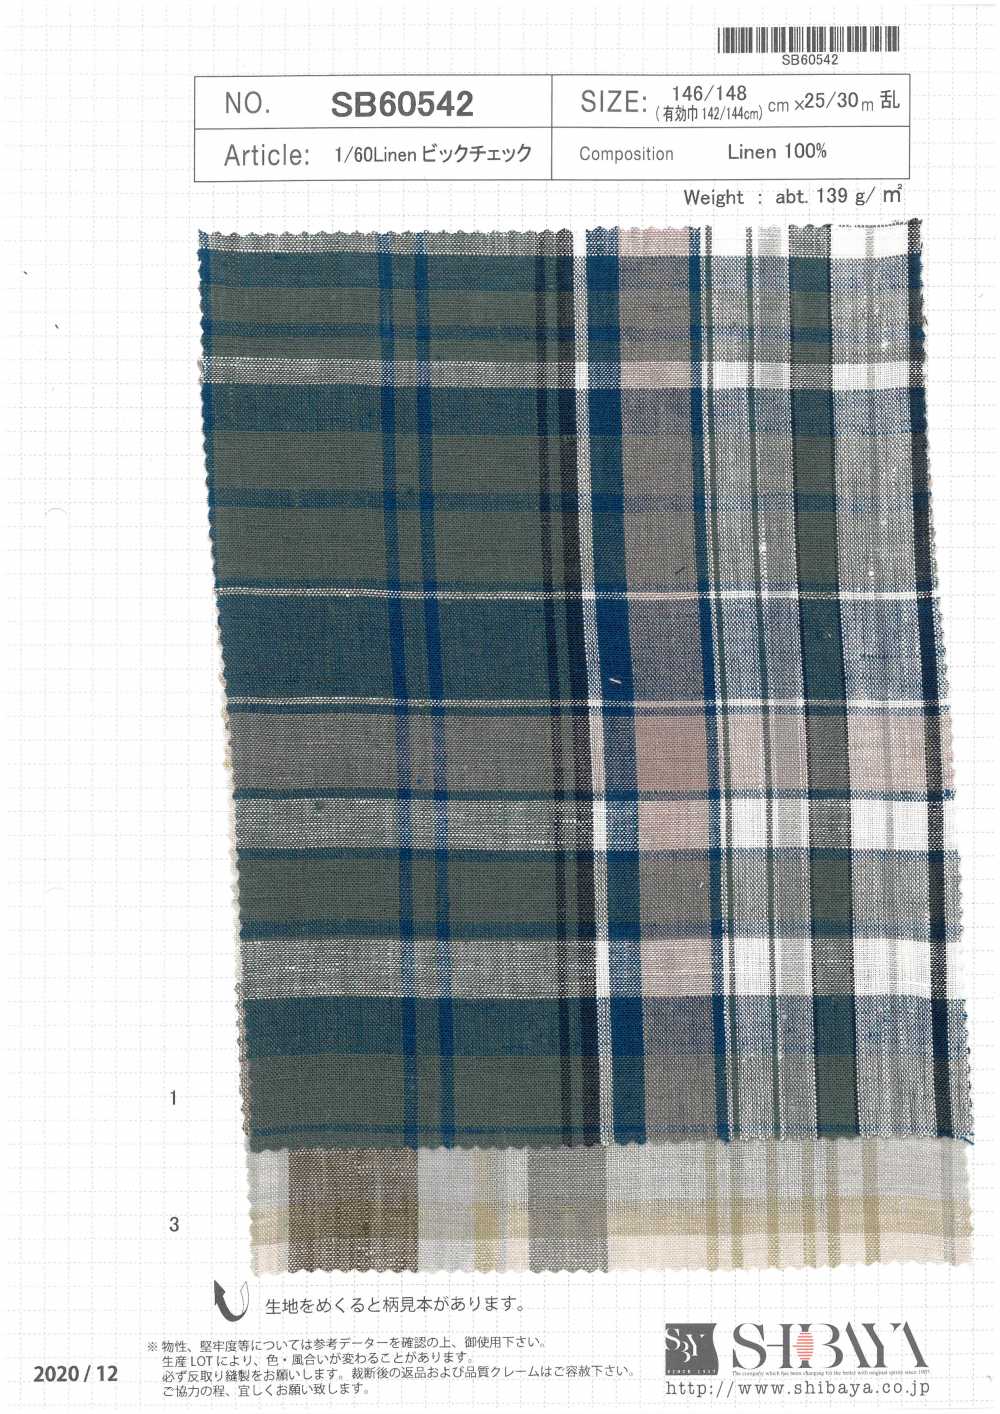 SB60542 1/60 Lin Gros Carreaux[Fabrication De Textile] SHIBAYA